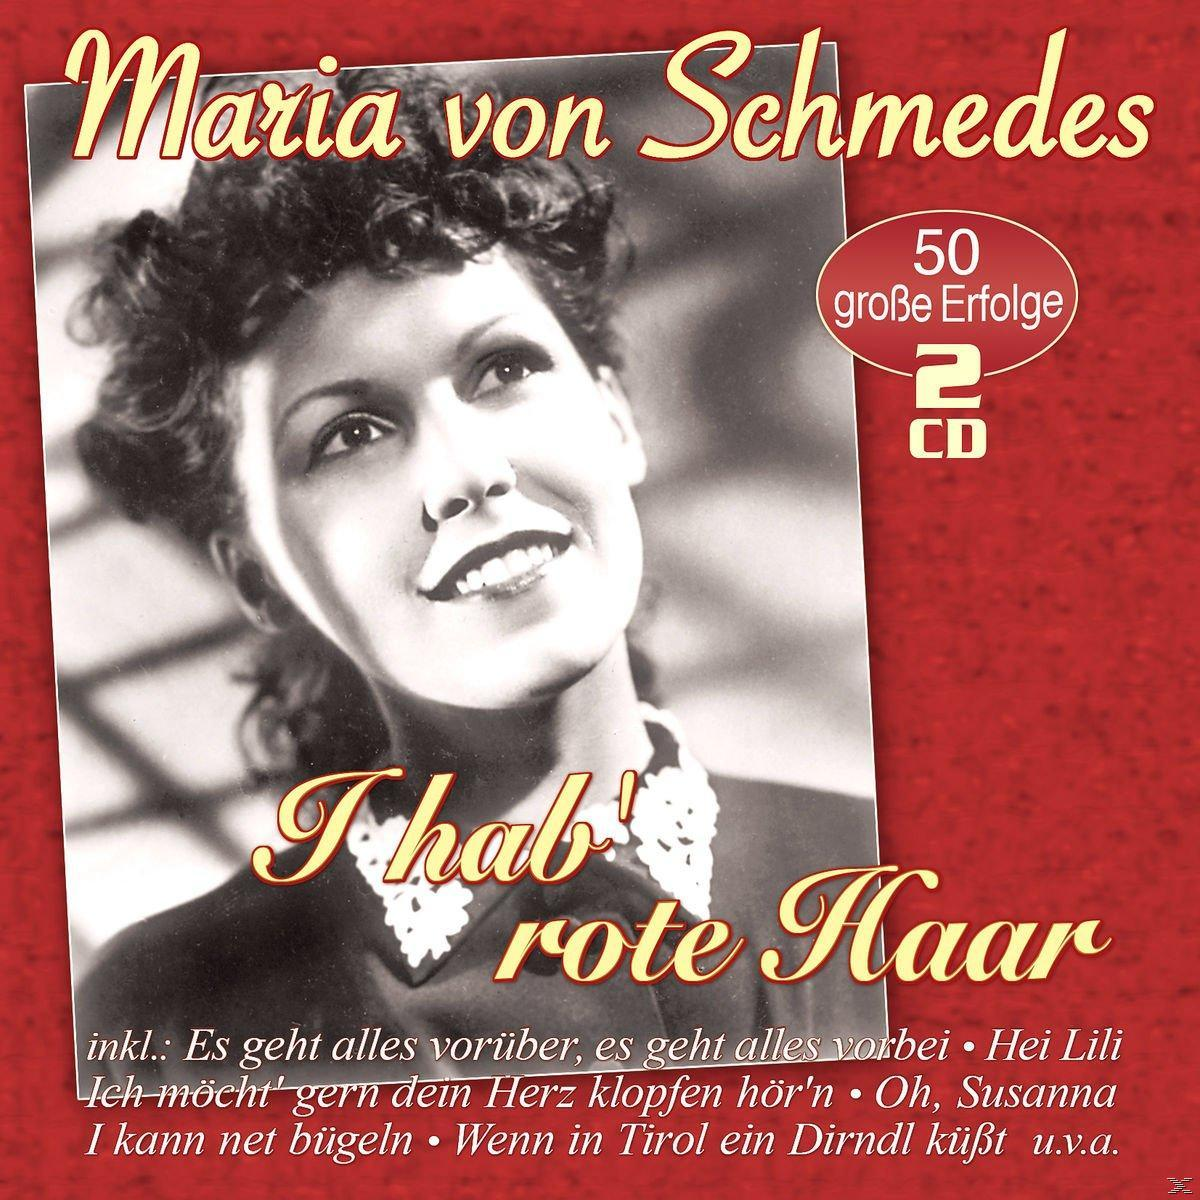 I Große Erfolge Schmedes Hab\' (CD) - Von - Haar-50 Rote Maria